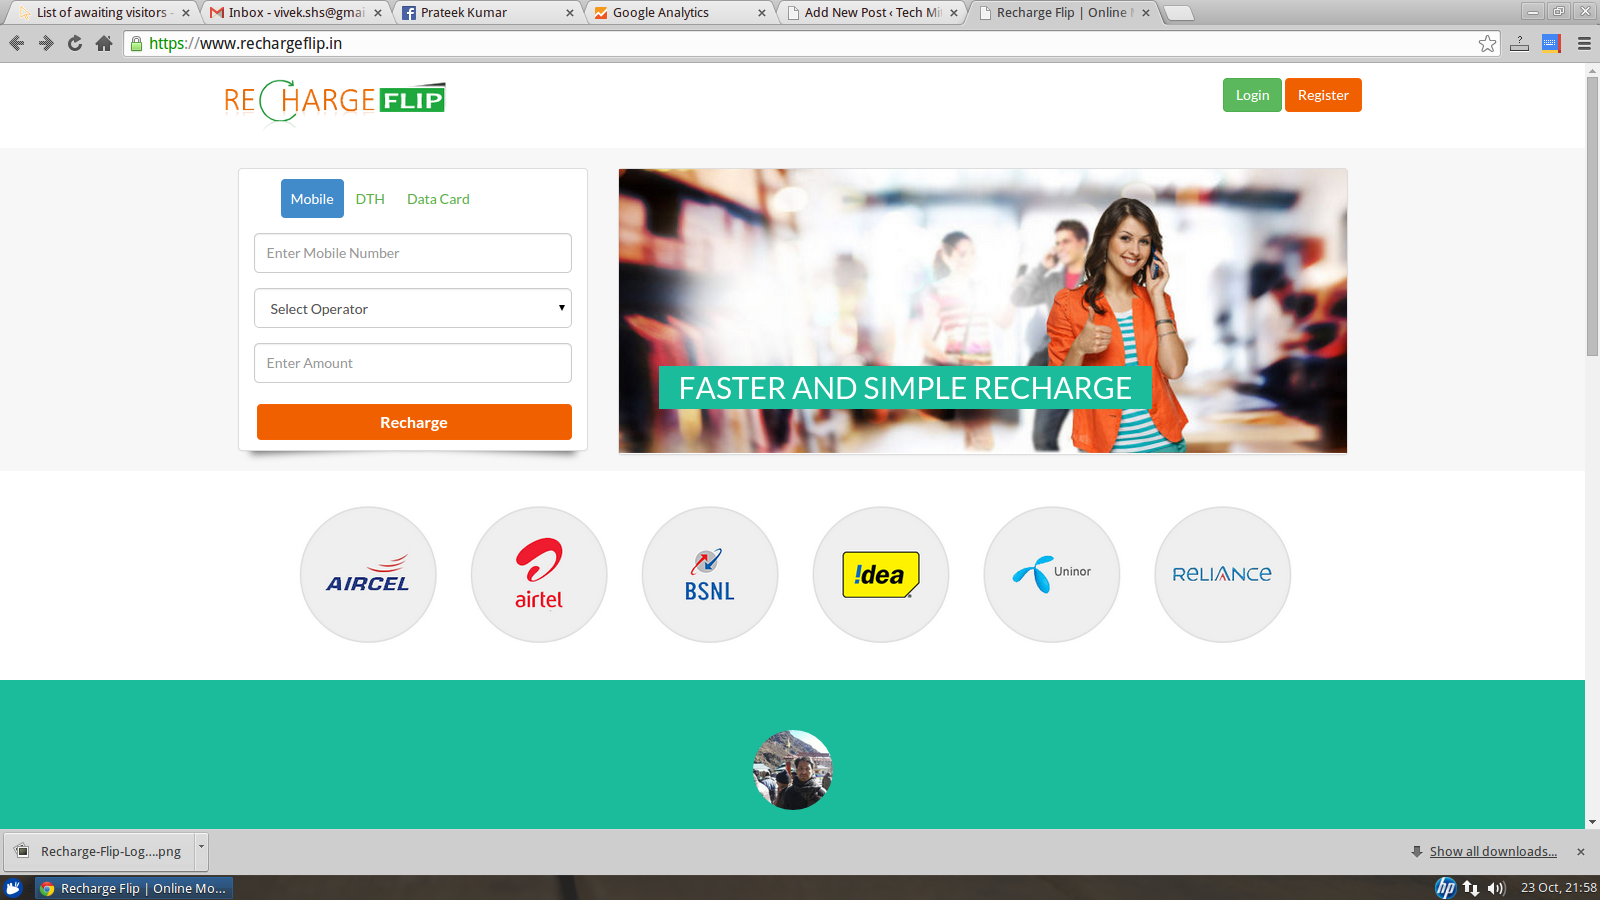 RechargeFlip Mobile Recharge Portal Made in Bihar with Love